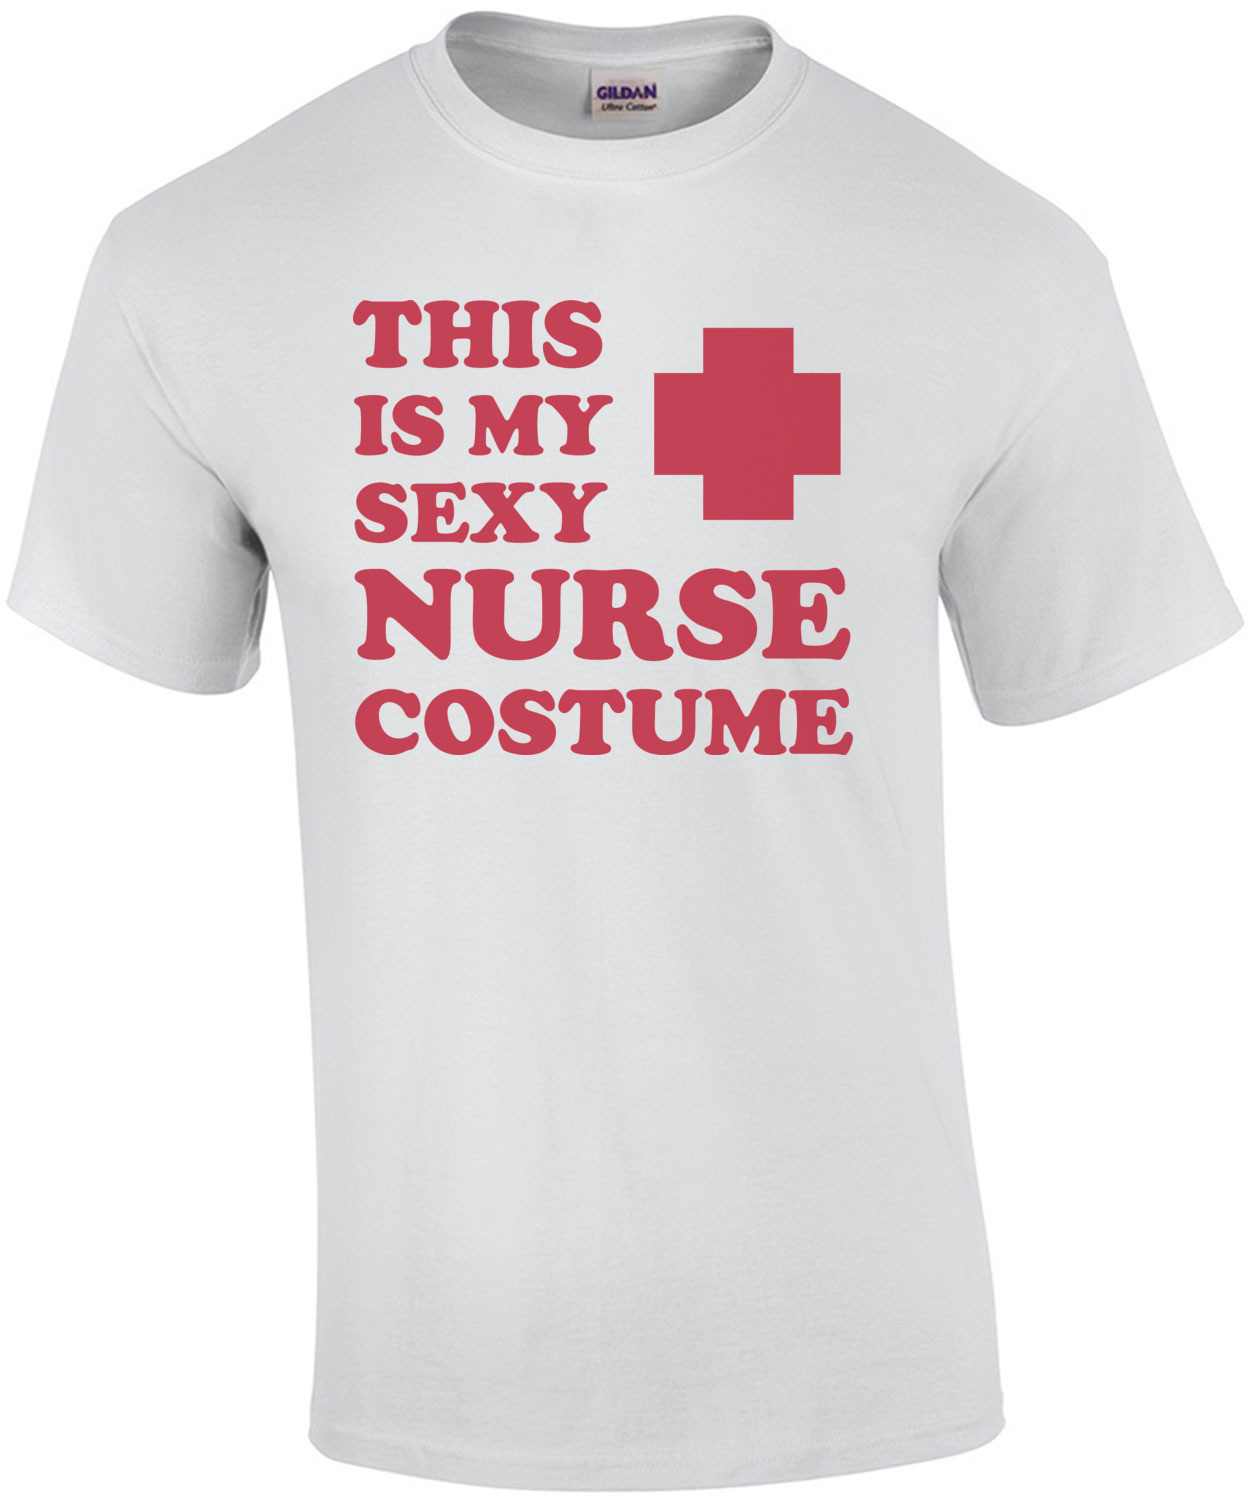 This is my sexy nurse costume